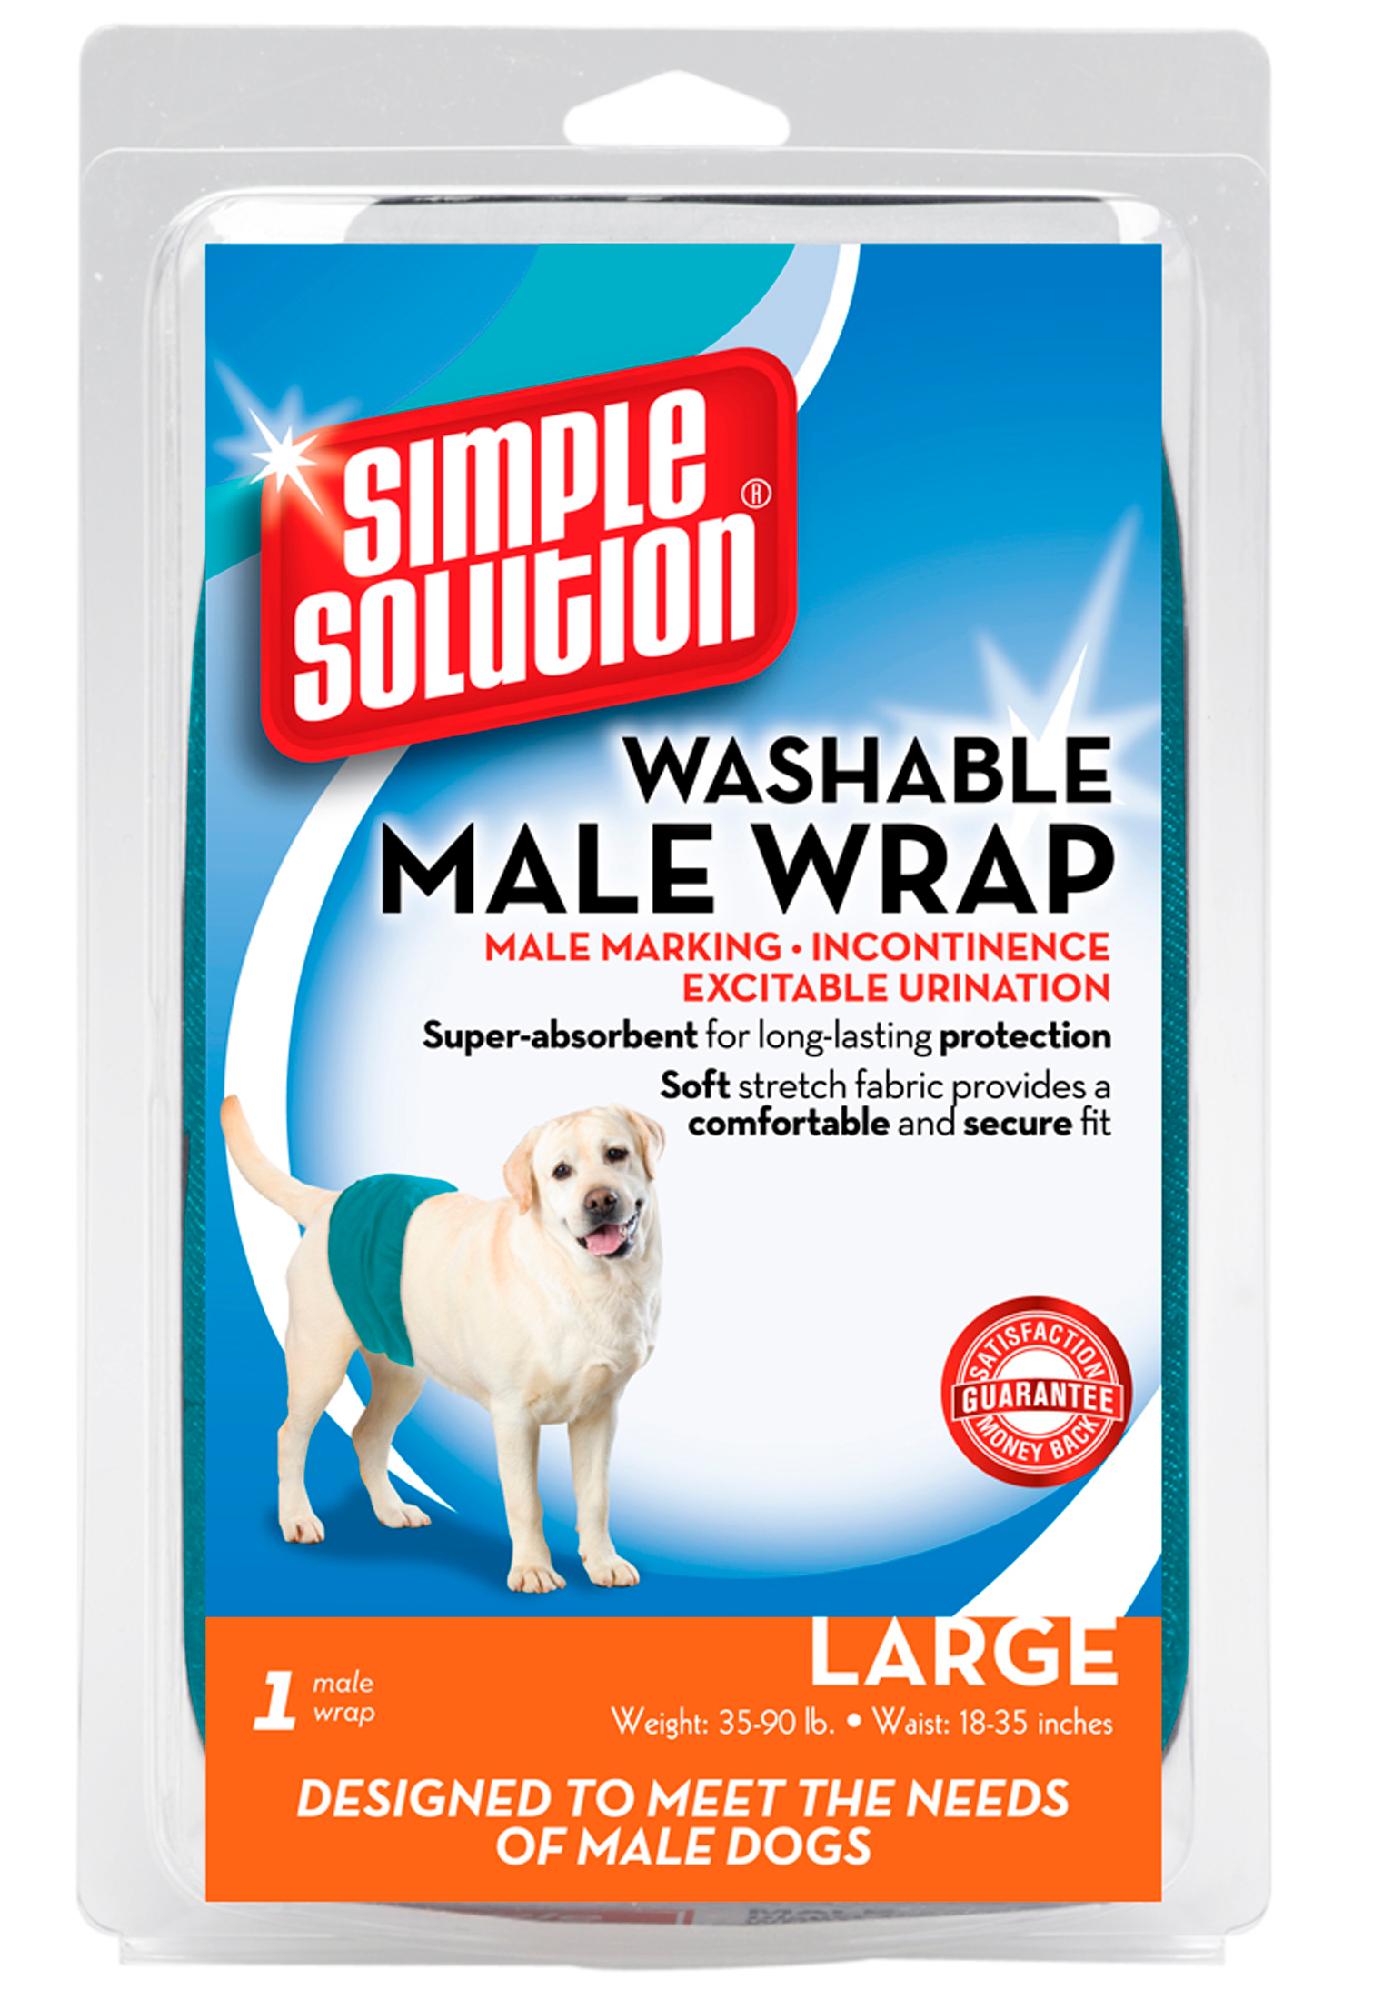 Simple Solution® Washable Male Wrap Large   Pet Supplies   Dog